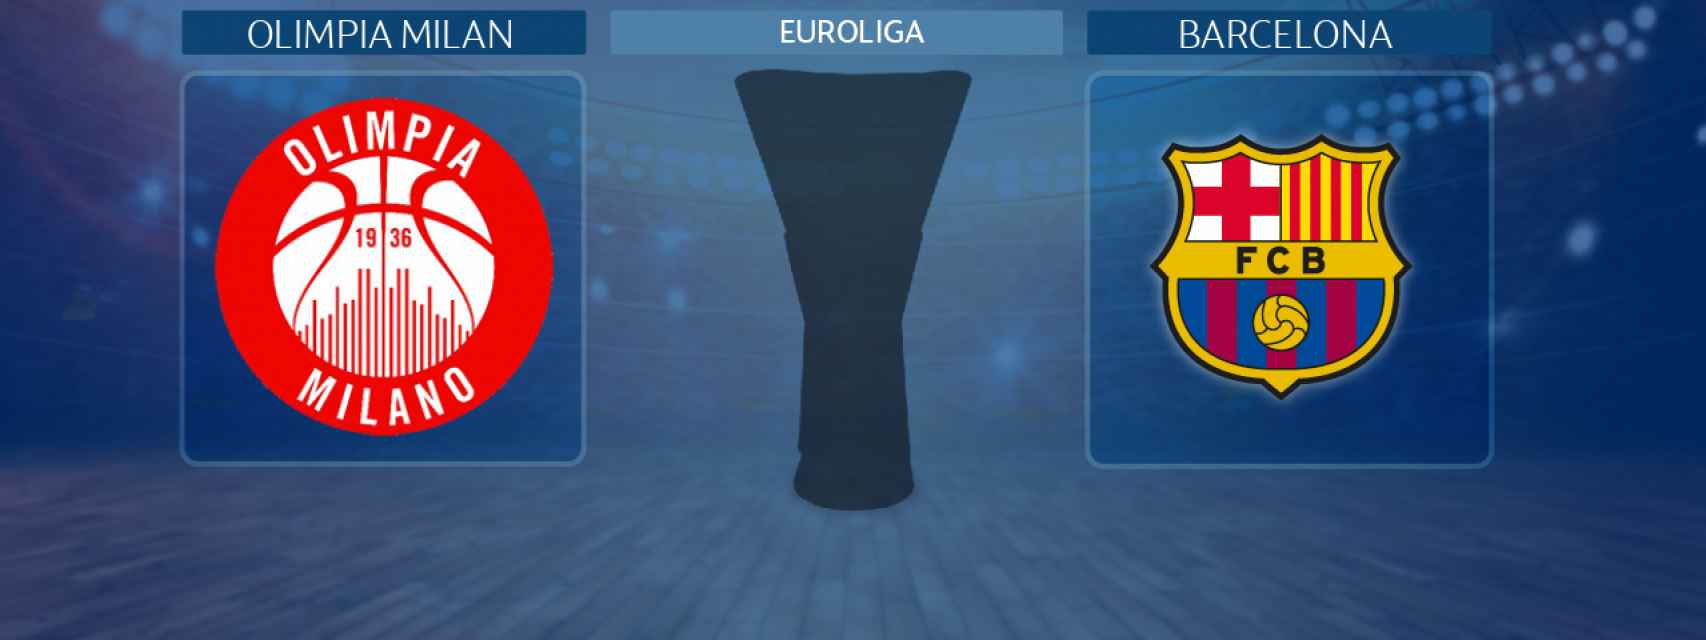 Olimpia Milan - Barcelona, partido de la Euroliga